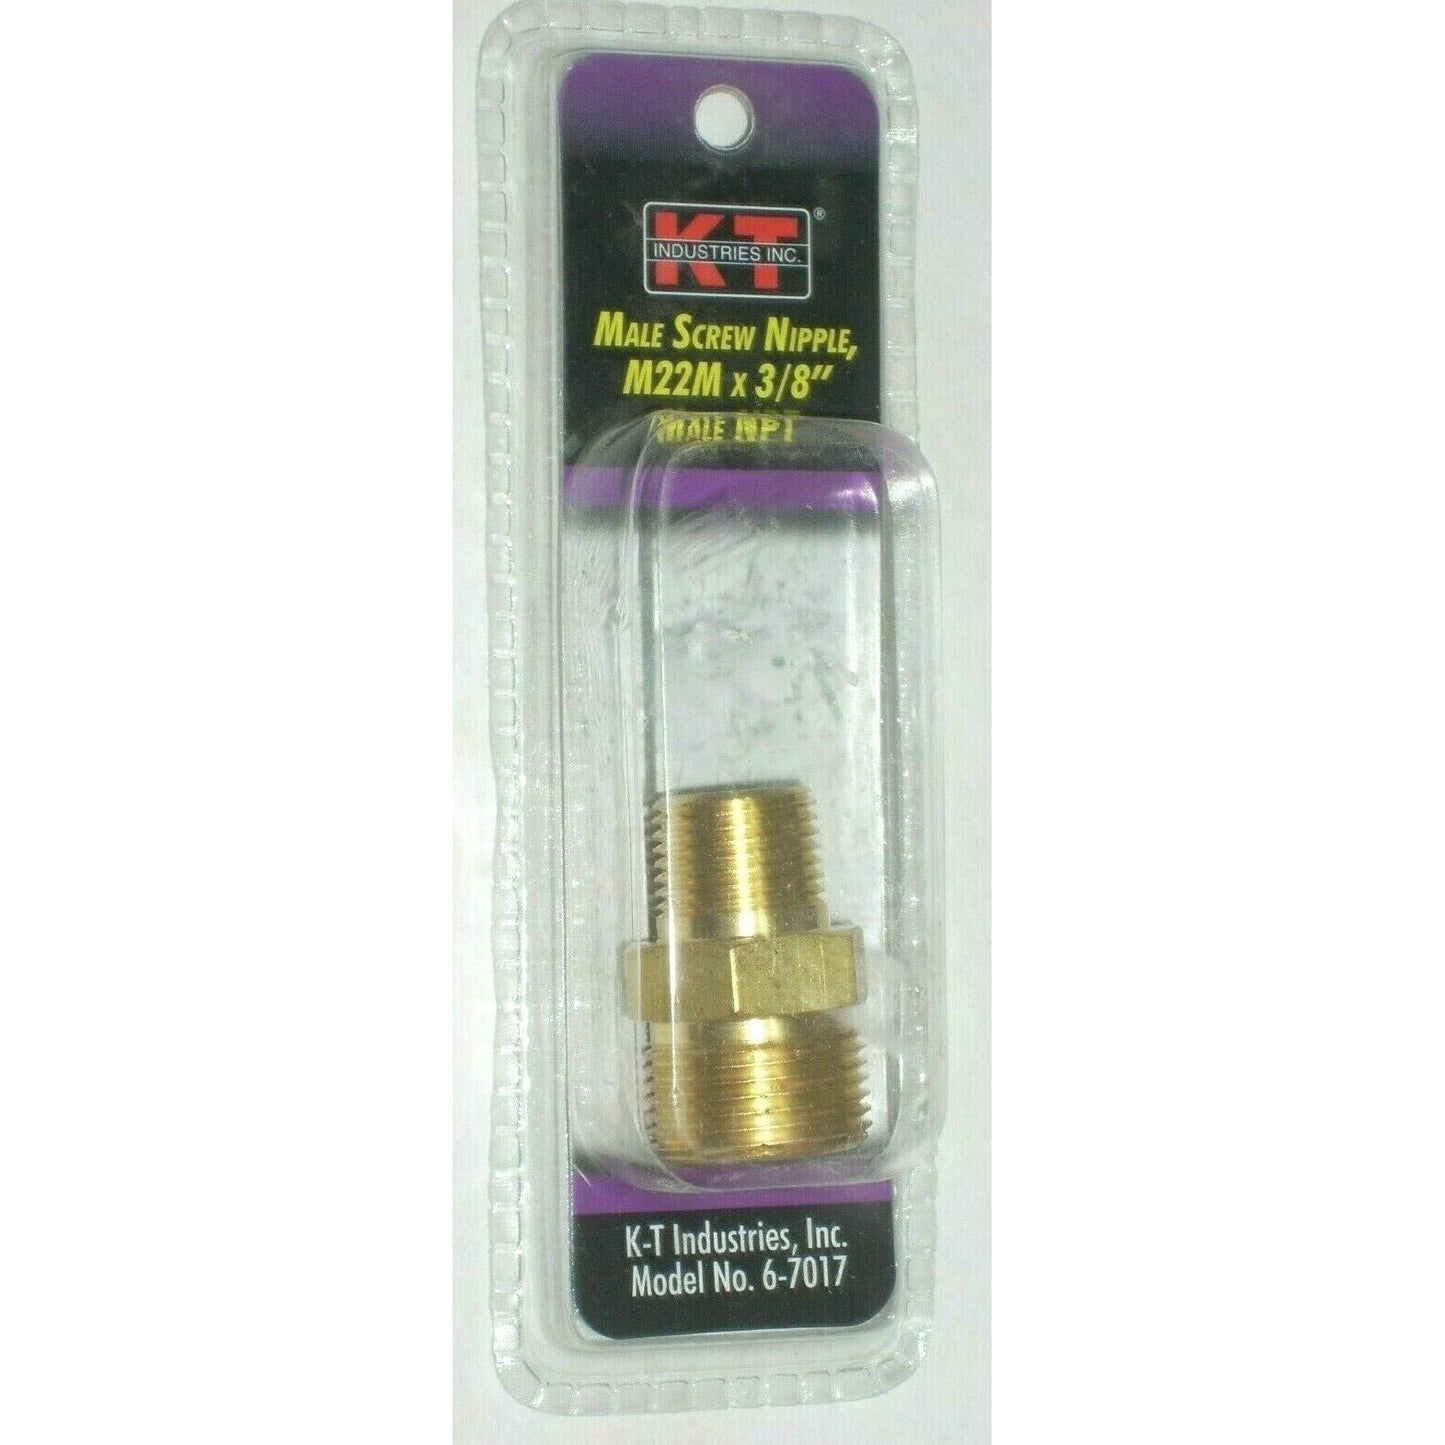 KT Industries 6-7017 Brass Male Screw Nipple M22M x 3/8 MNPT for Pressure Washer